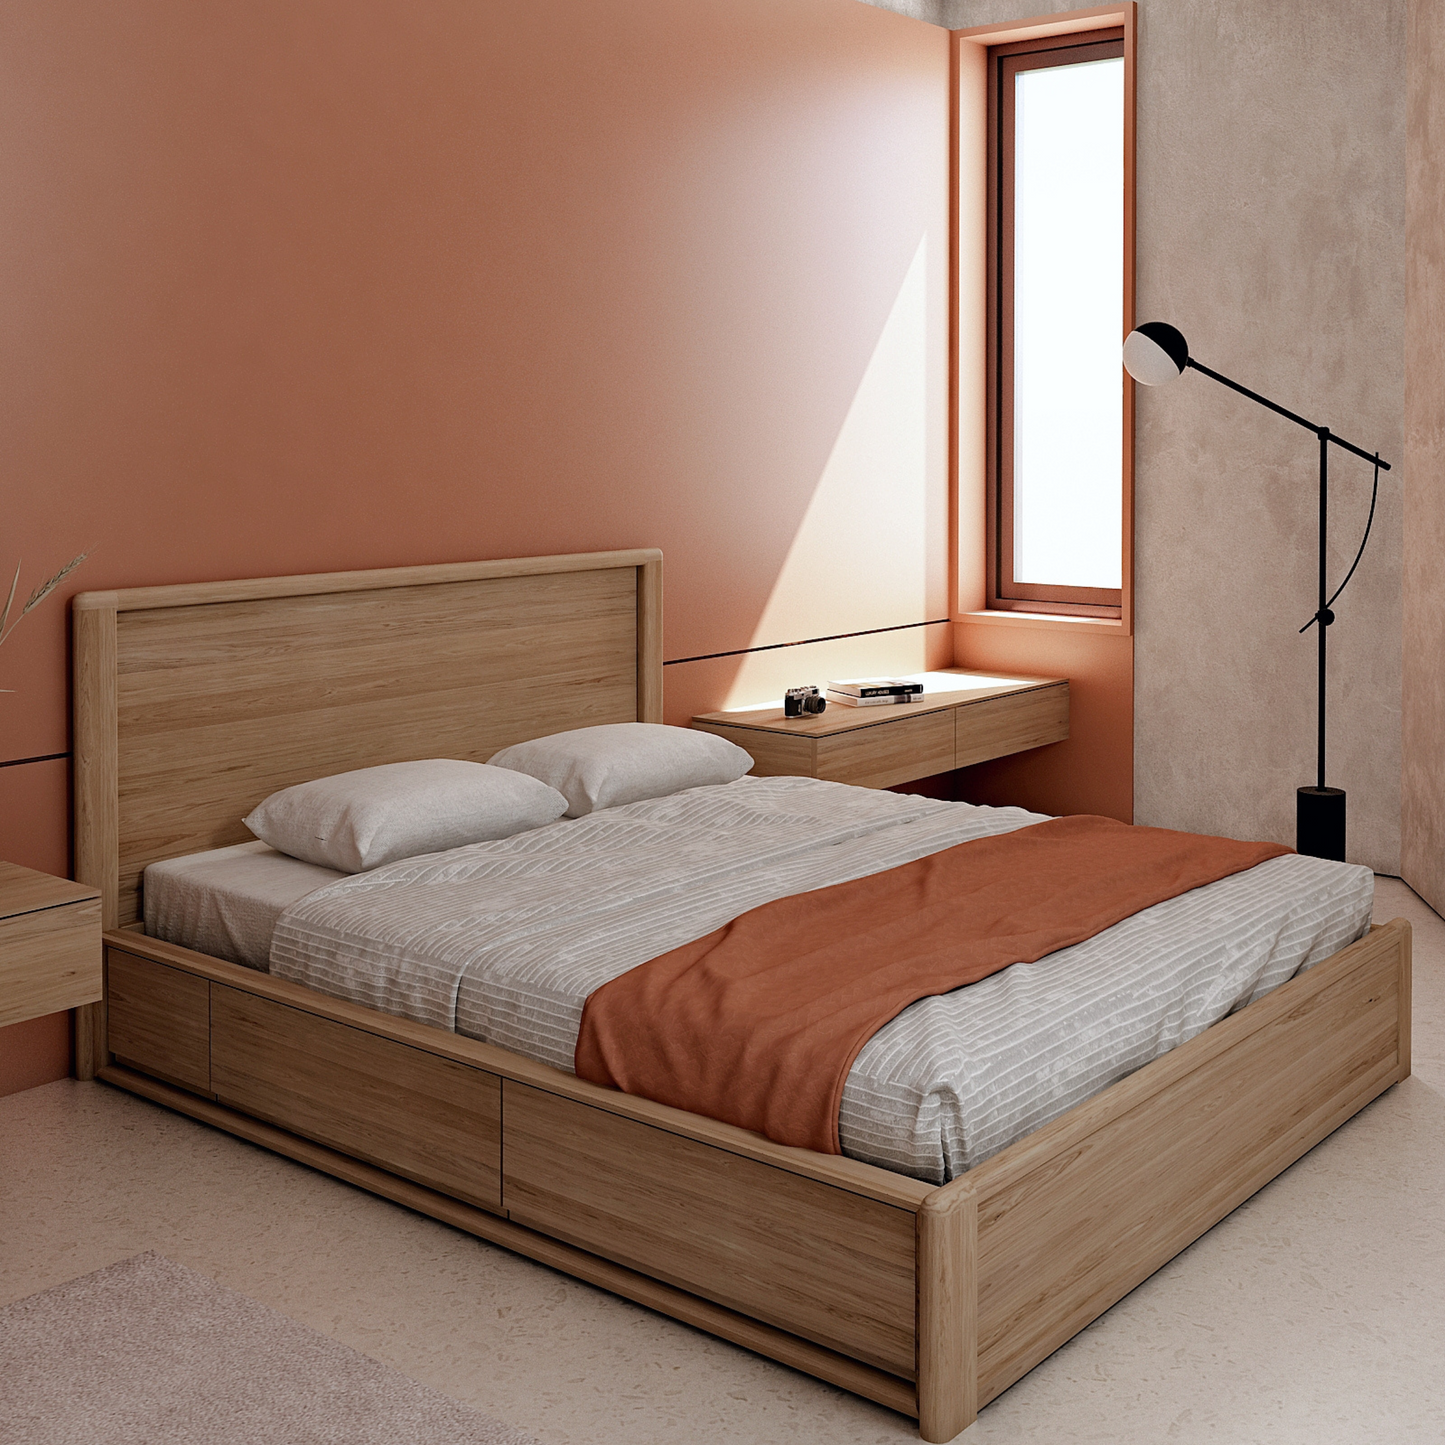 Circa Queen Bed with Fabric Headboard - European Oak